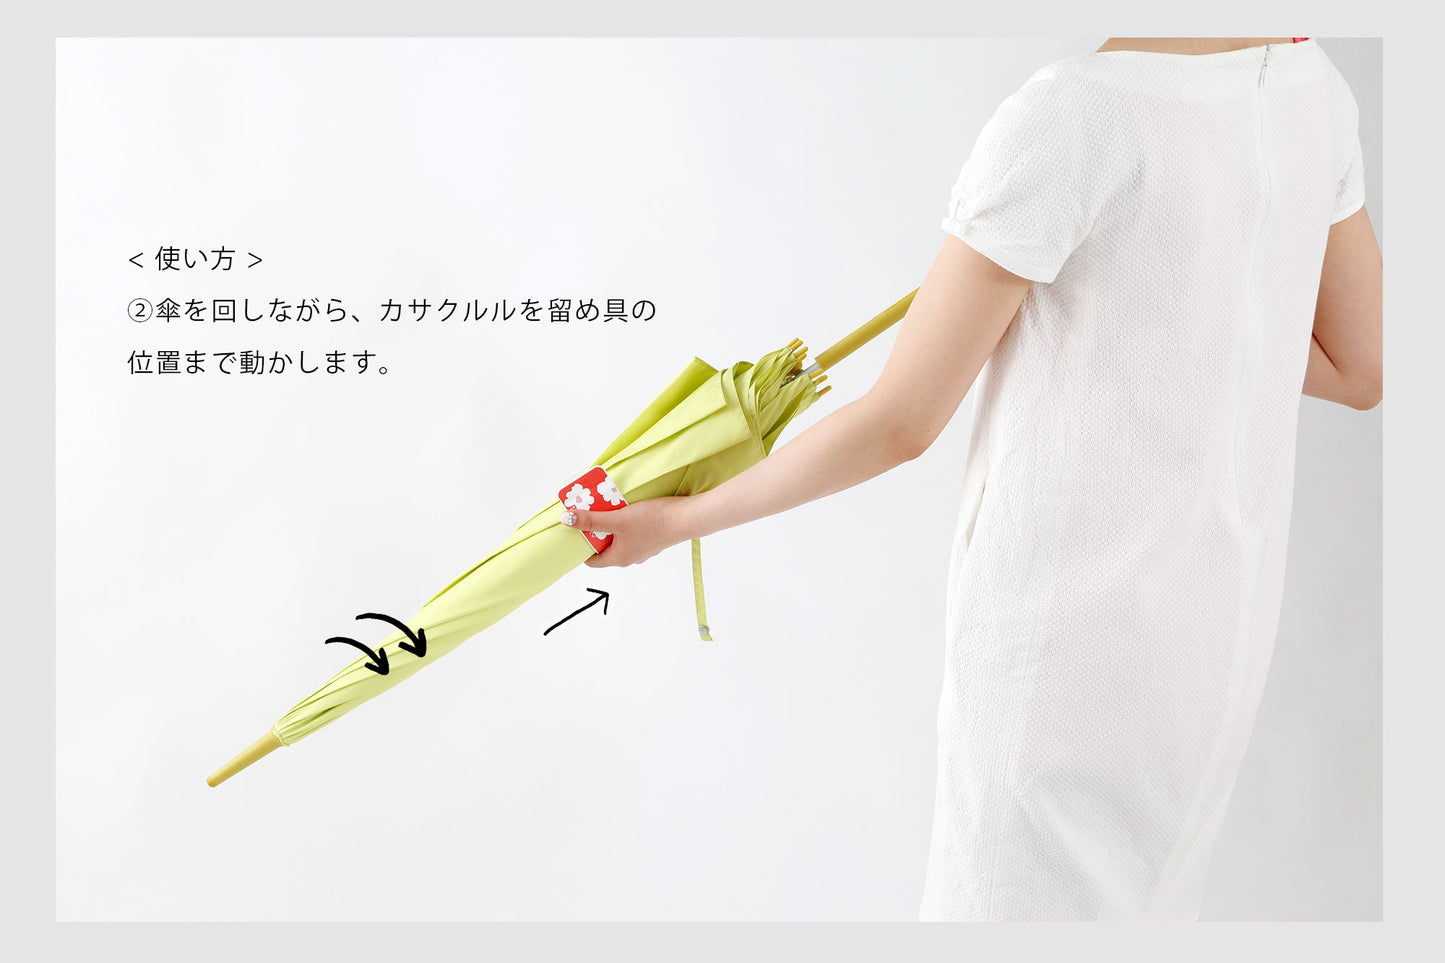 KASAKULULU Umbrella Clip (Made in Japan)